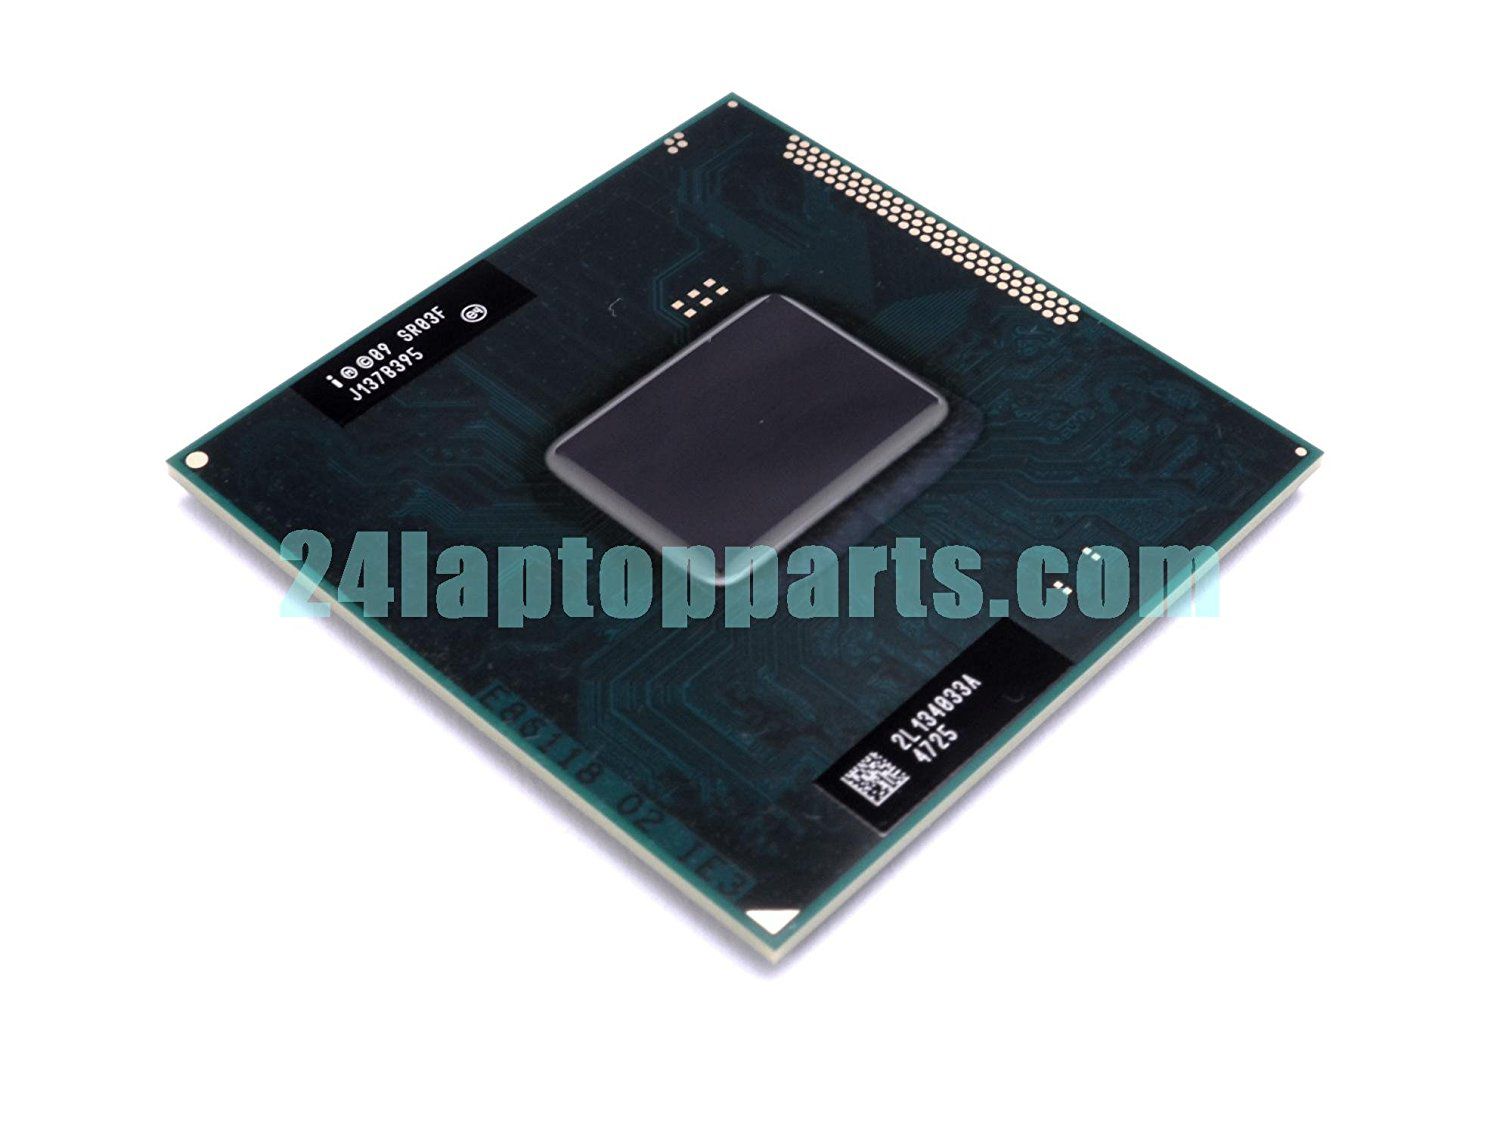 Intel Core i7-2620M SR03F 2.7GHz 4MB Dual-core Mobile CPU Processor